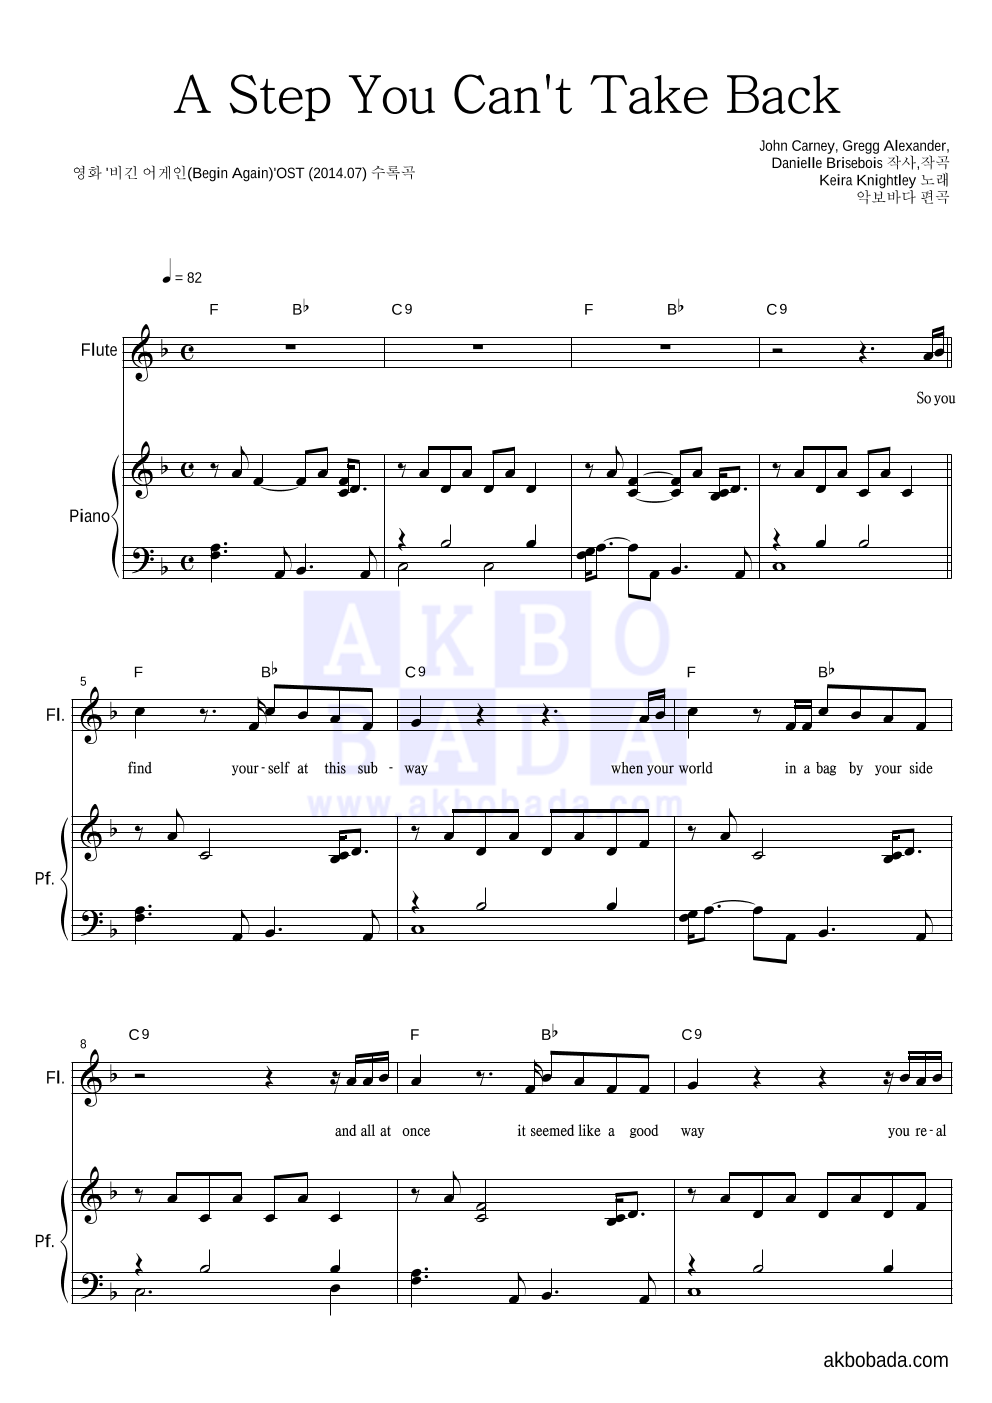 Keira Knightley - A Step You Can't Take Back 플룻&피아노 악보 